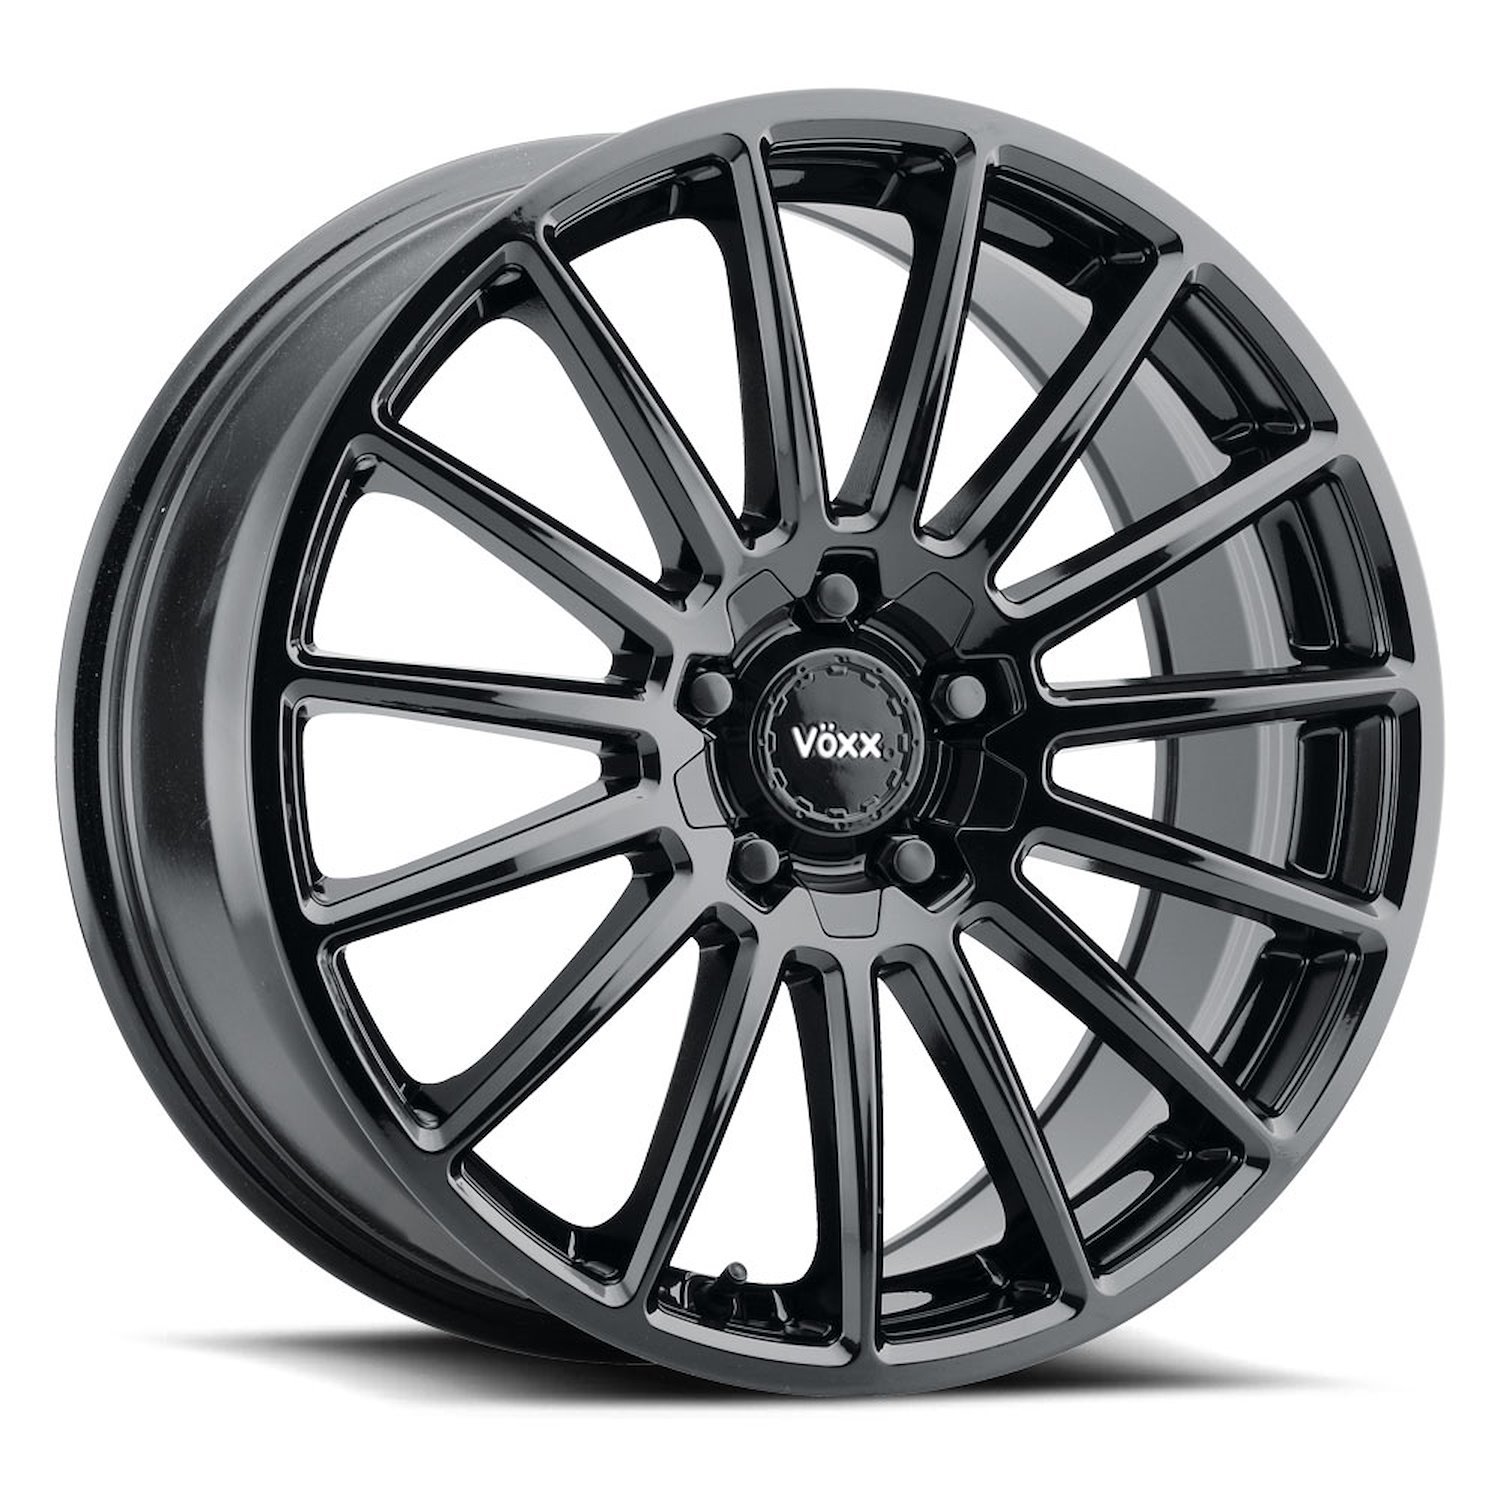 CAS 775-5002-40 GB Casina Wheel [Size: 17" x 7.50"] Finish: Gloss Black